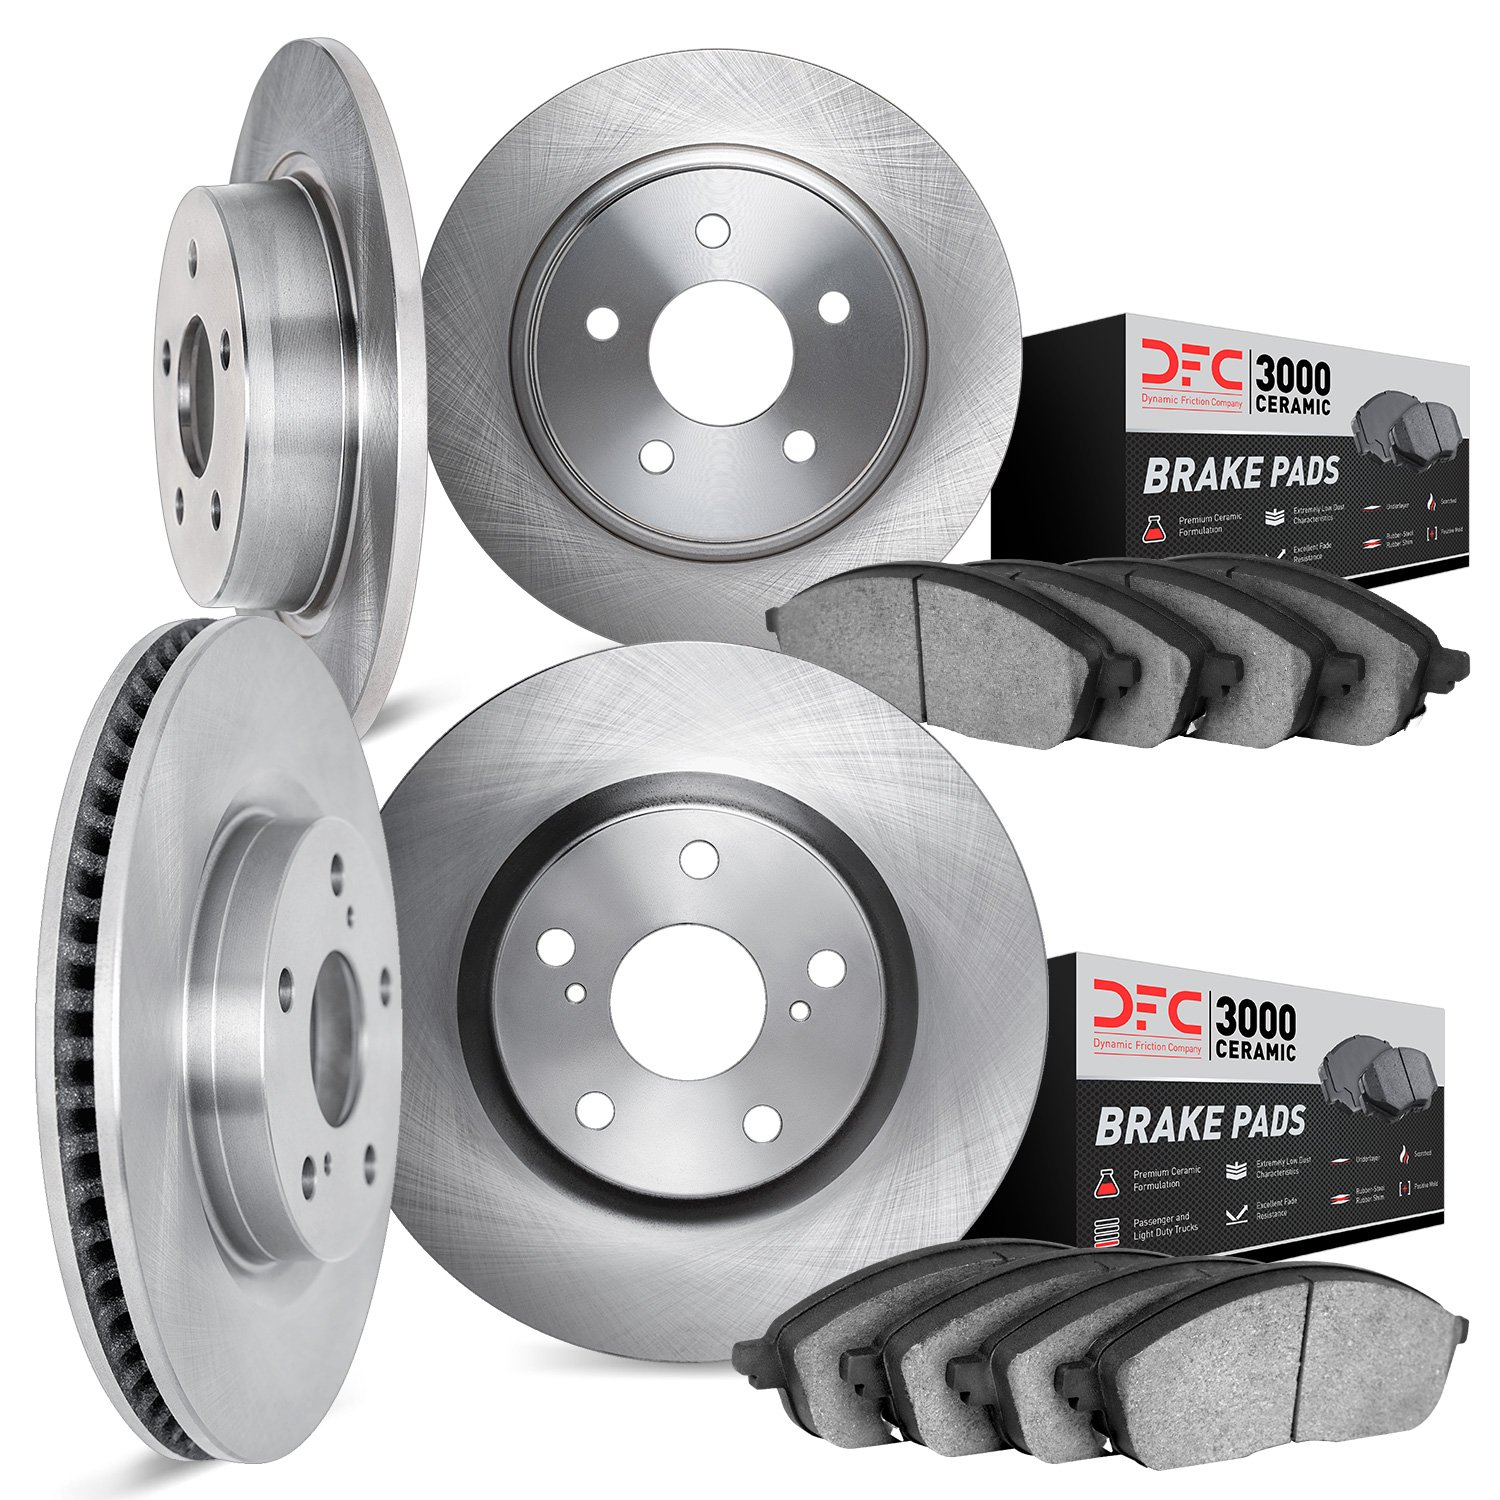 6304-58015 Brake Rotors with 3000-Series Ceramic Brake Pads Kit, 2014-2020 Acura/Honda, Position: Front and Rear